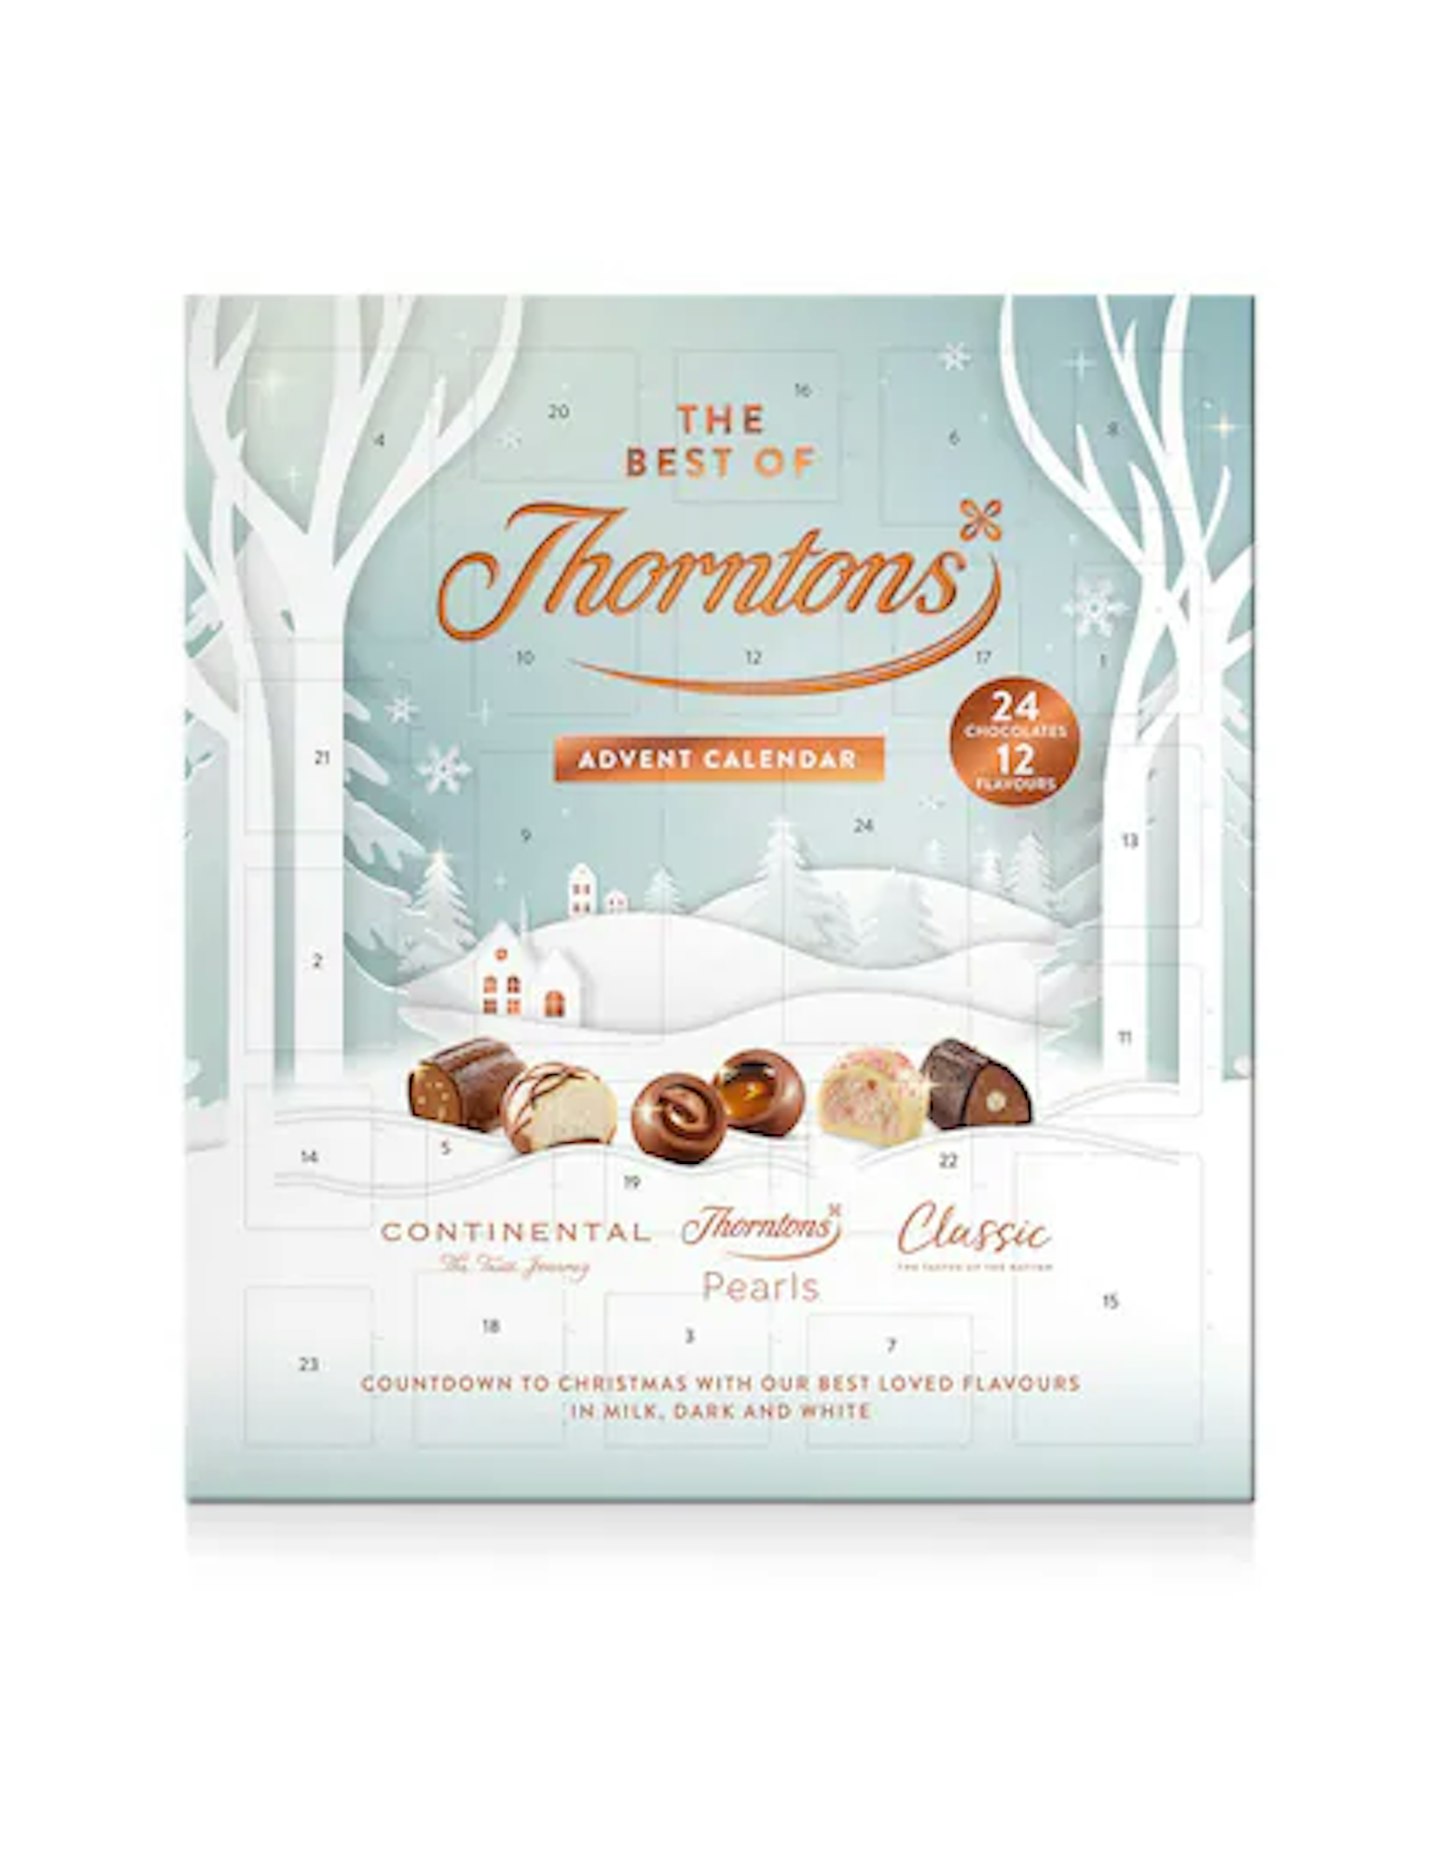 Thorntons - Adult advent calendar